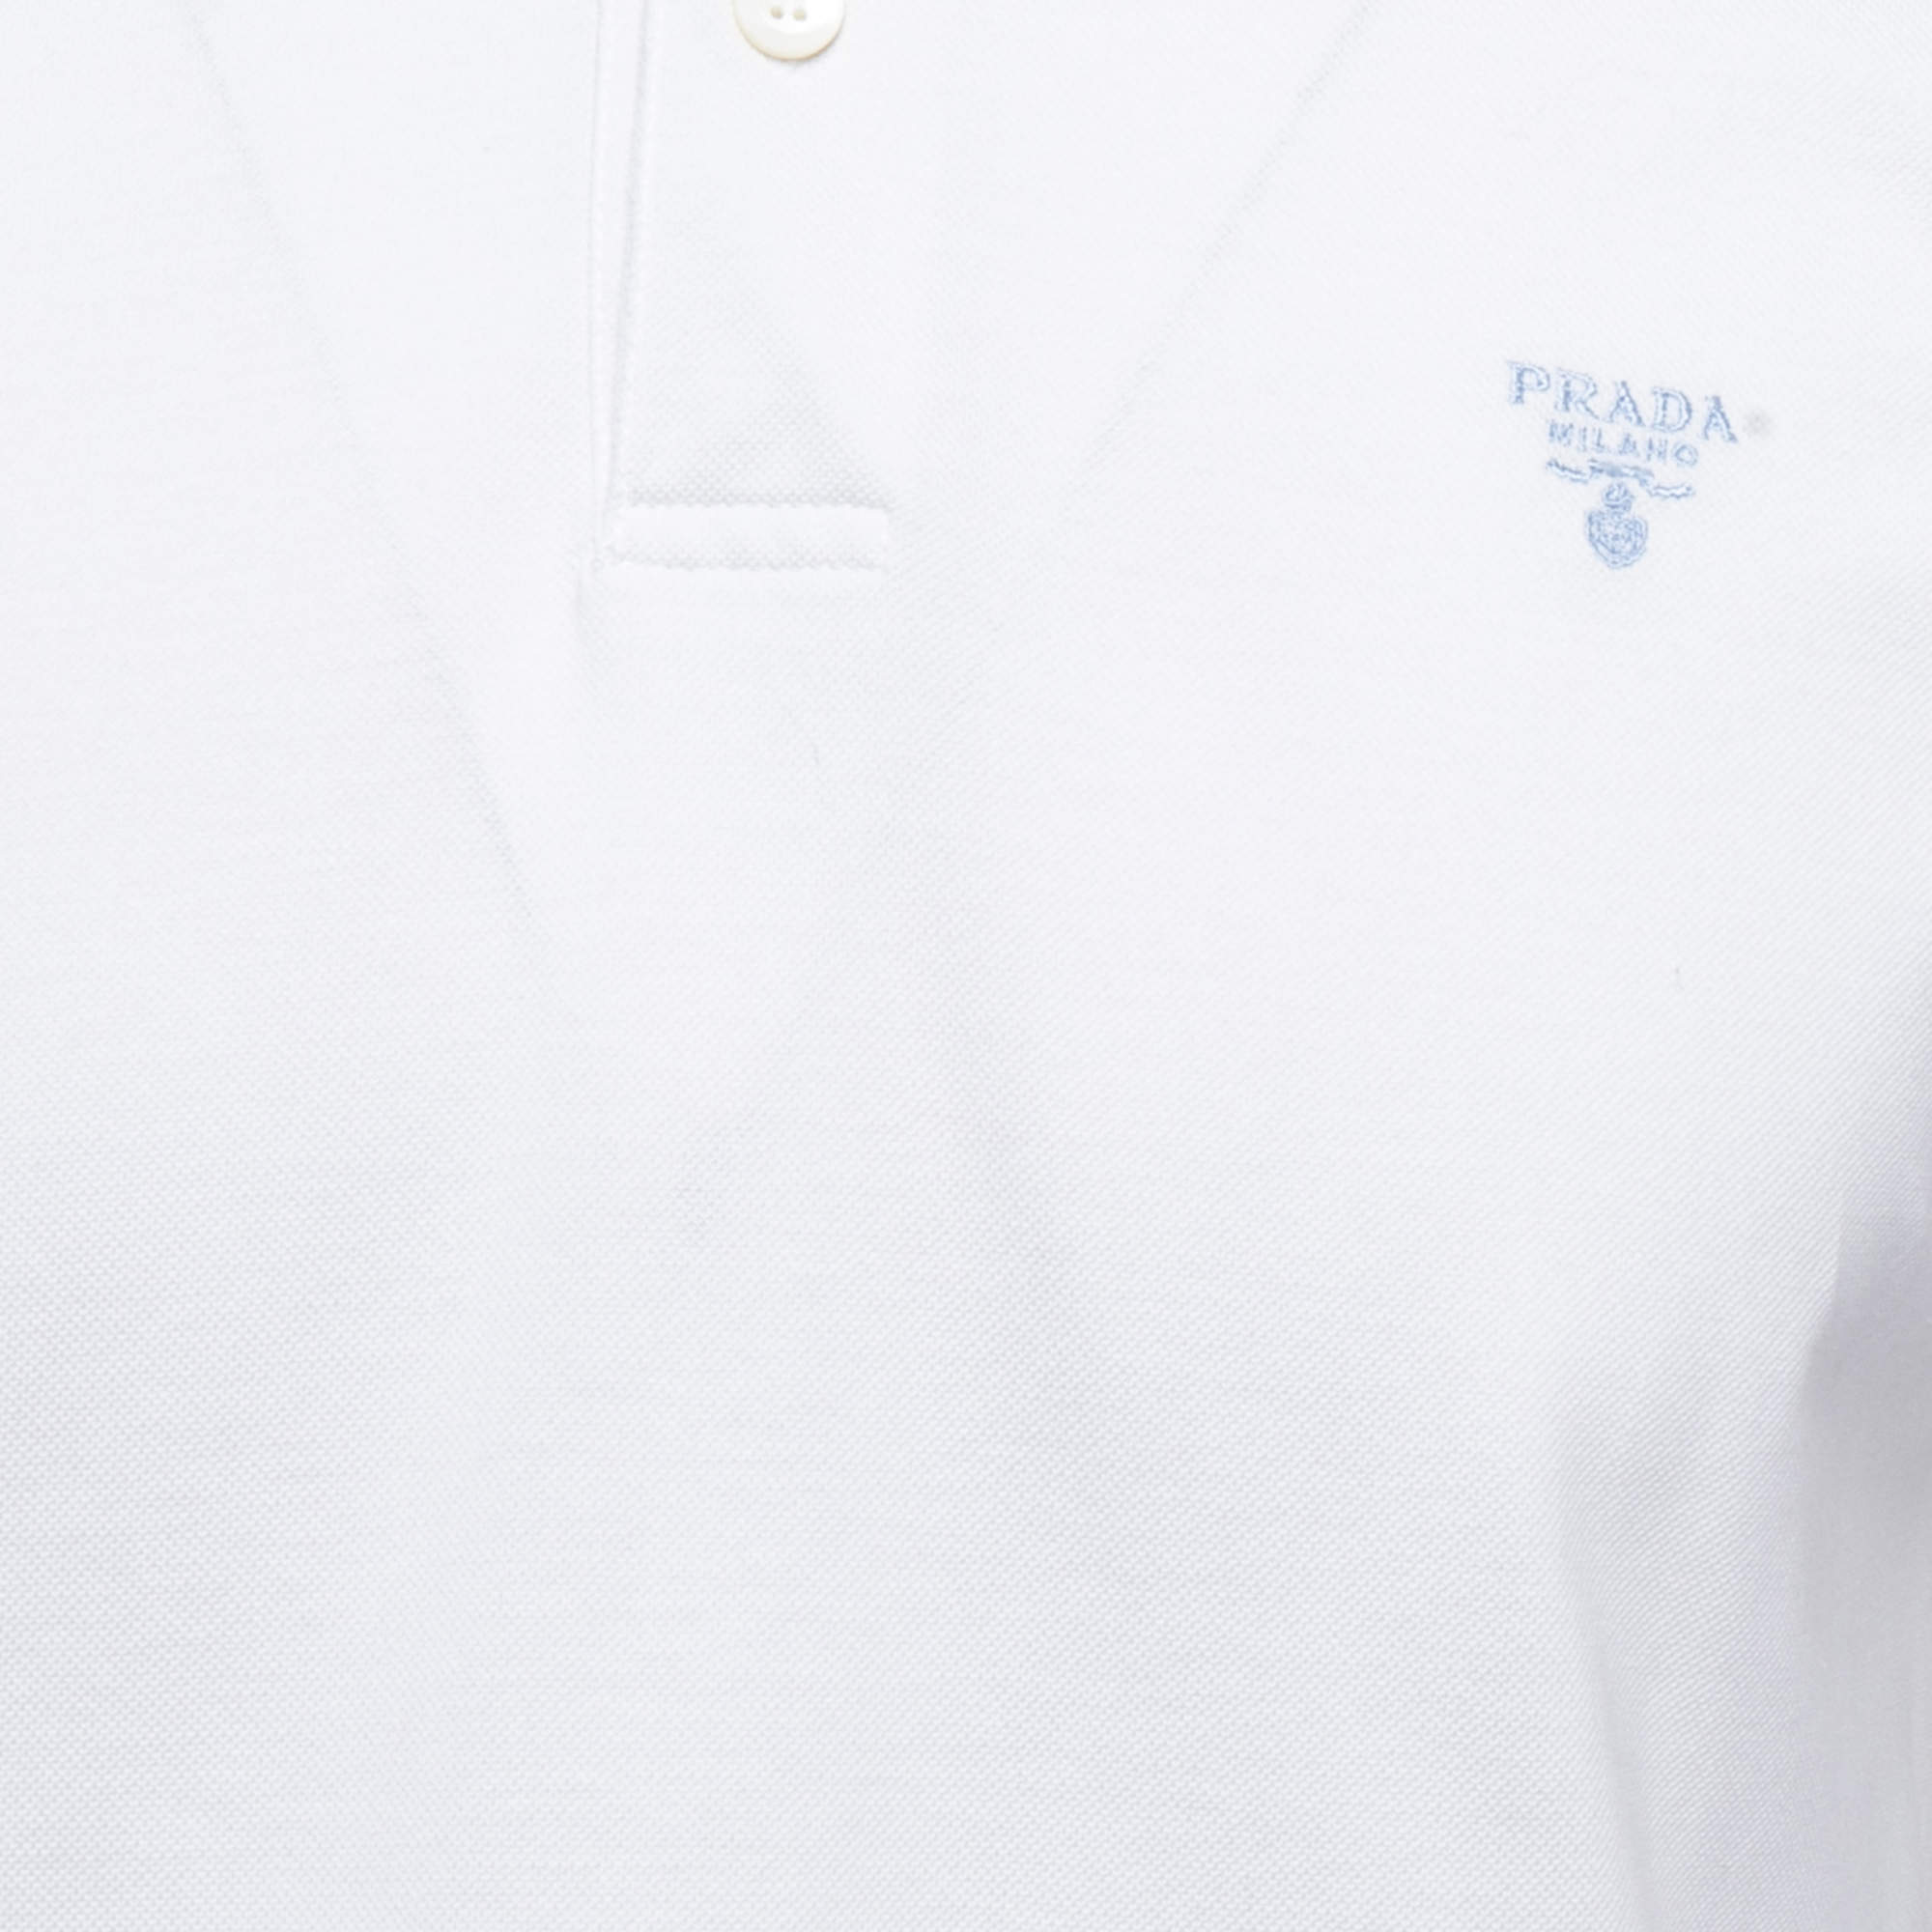 Prada White Logo Embroidered Cotton Pique Polo T-Shirt L Prada